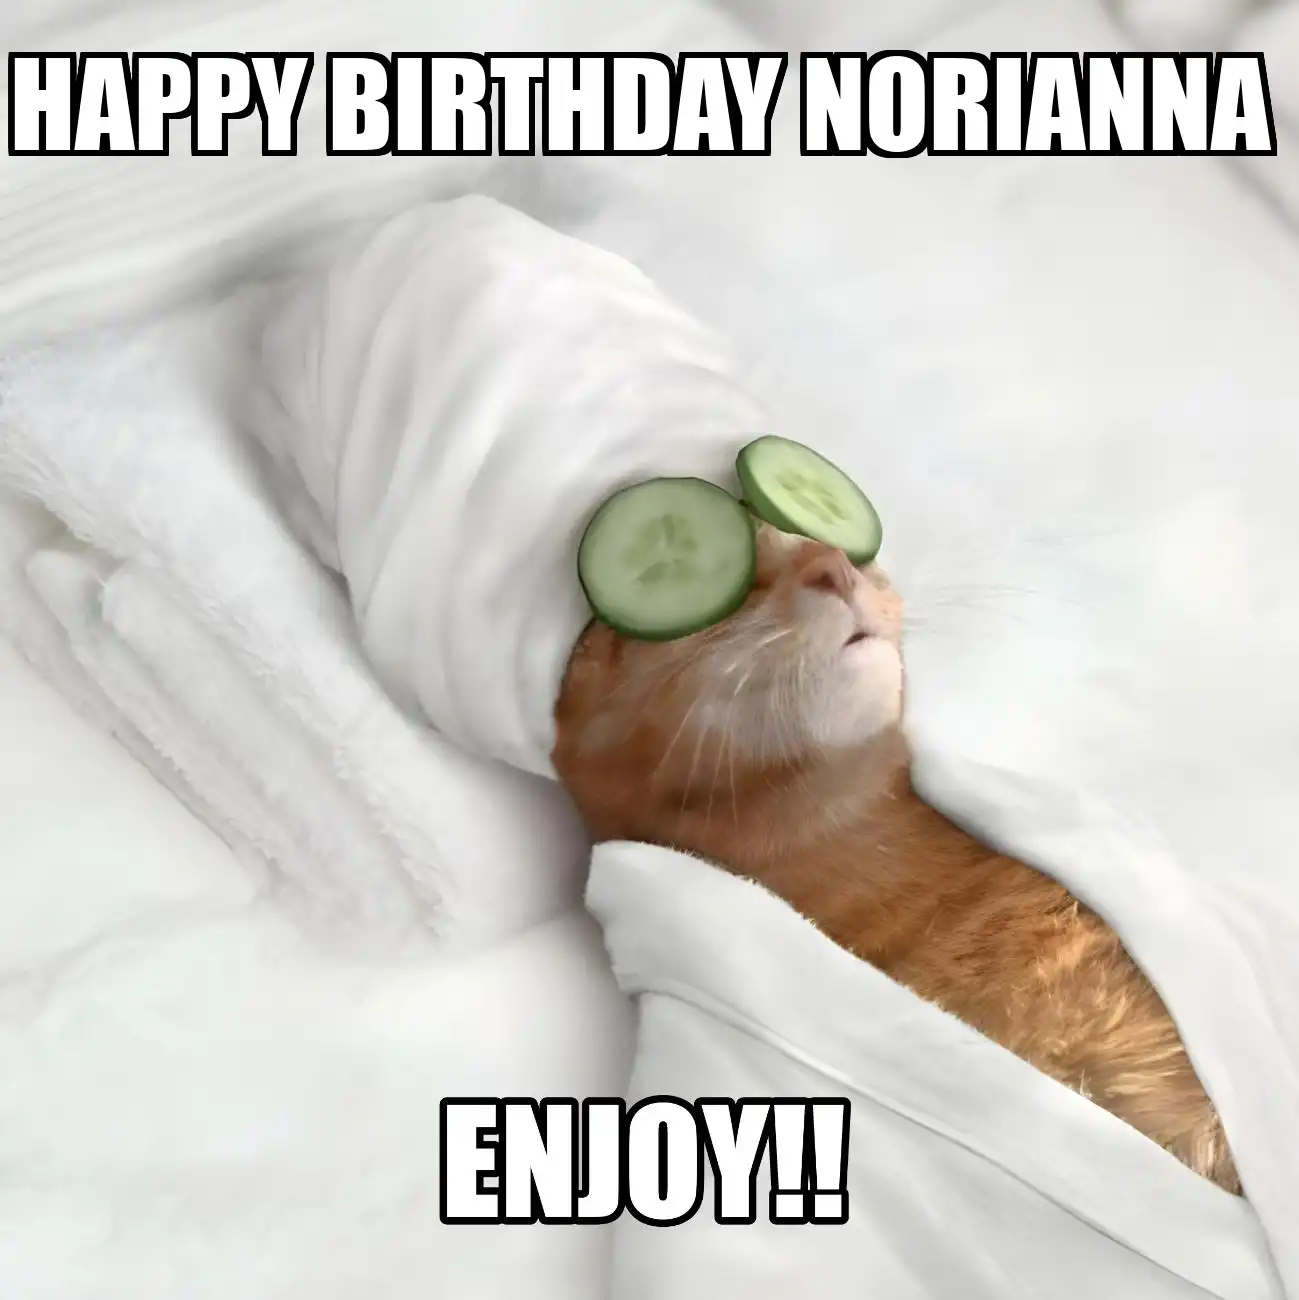 Happy Birthday Norianna Enjoy Cat Meme